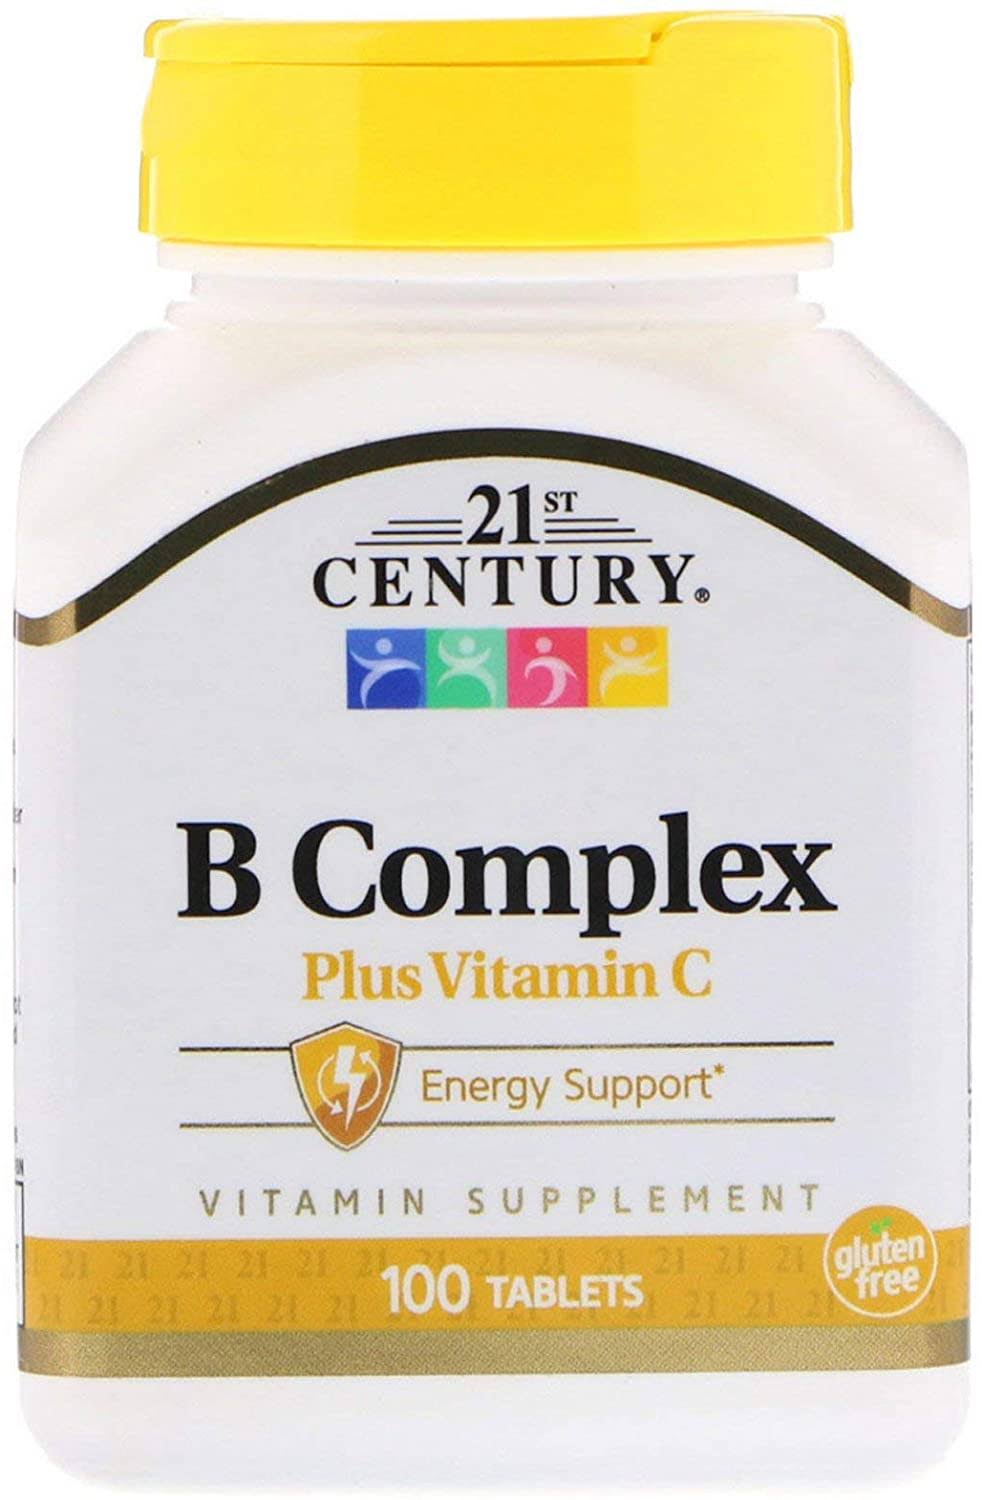 21ST Century B Complex With C Supplement - 100ct